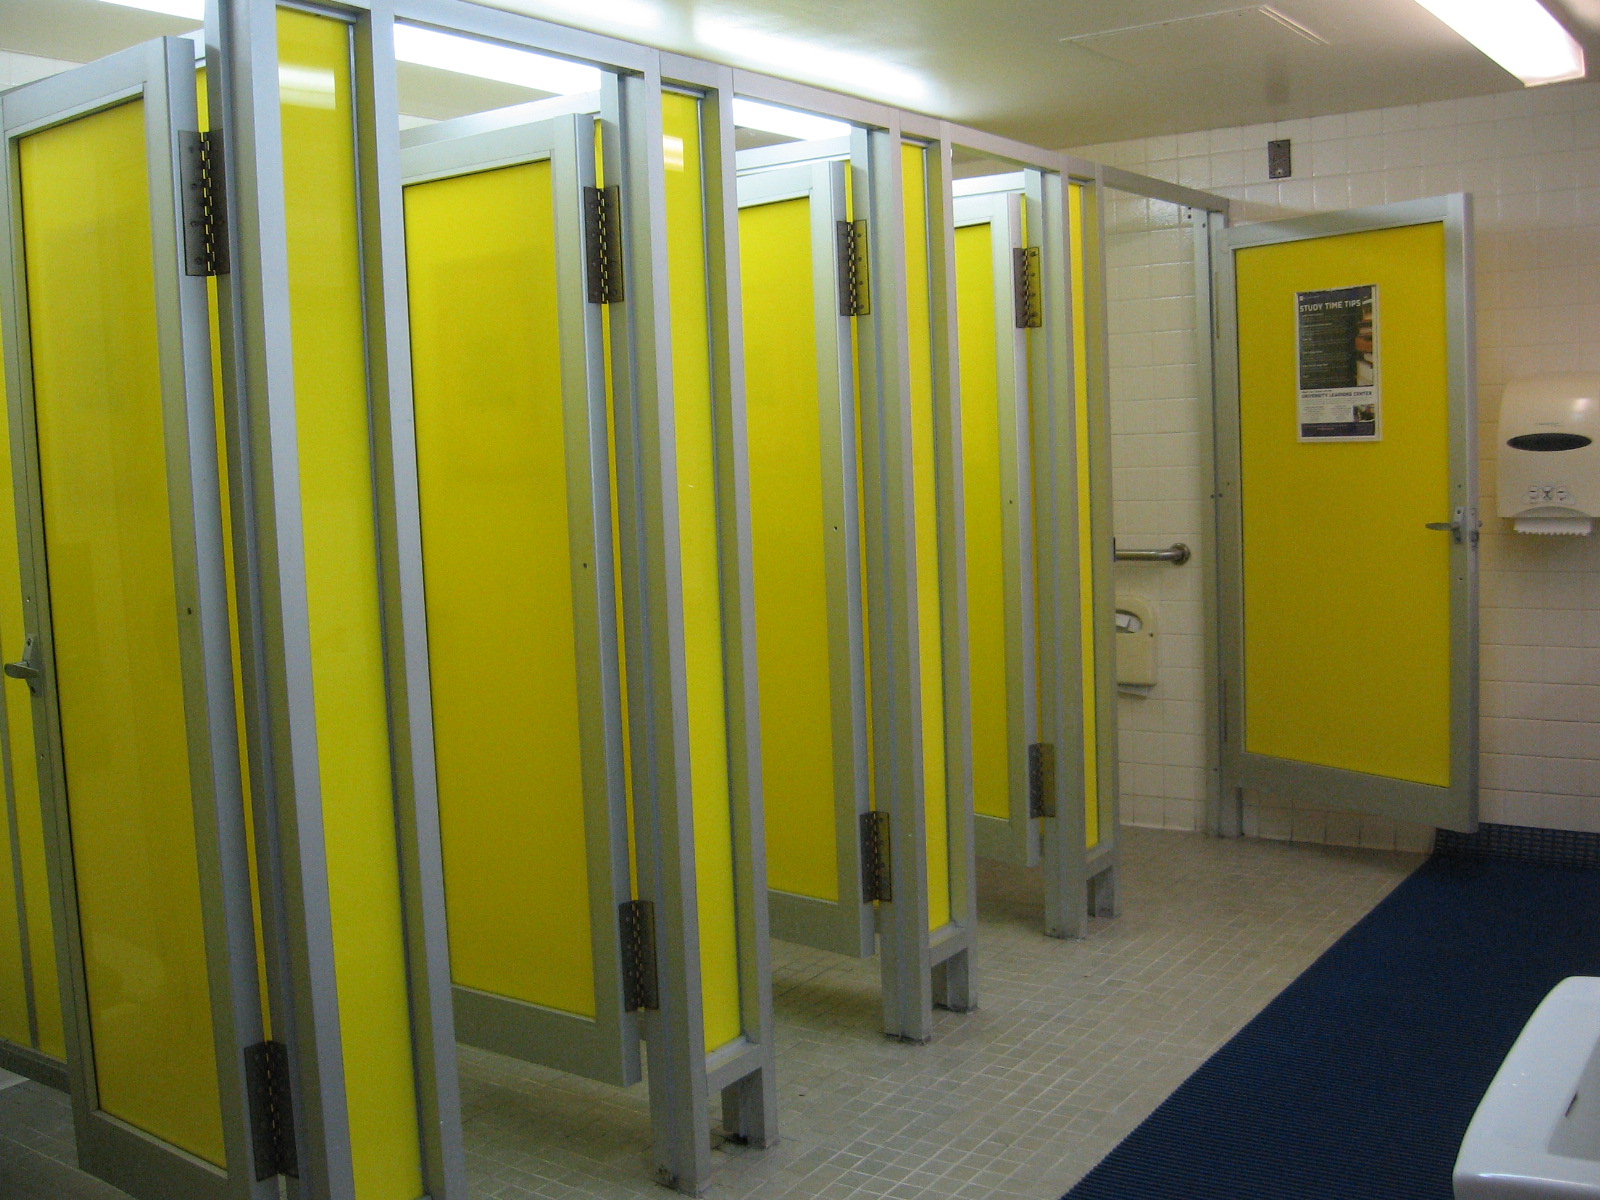 School Restroom Stalls Bright Yellow Bathroom Stalls